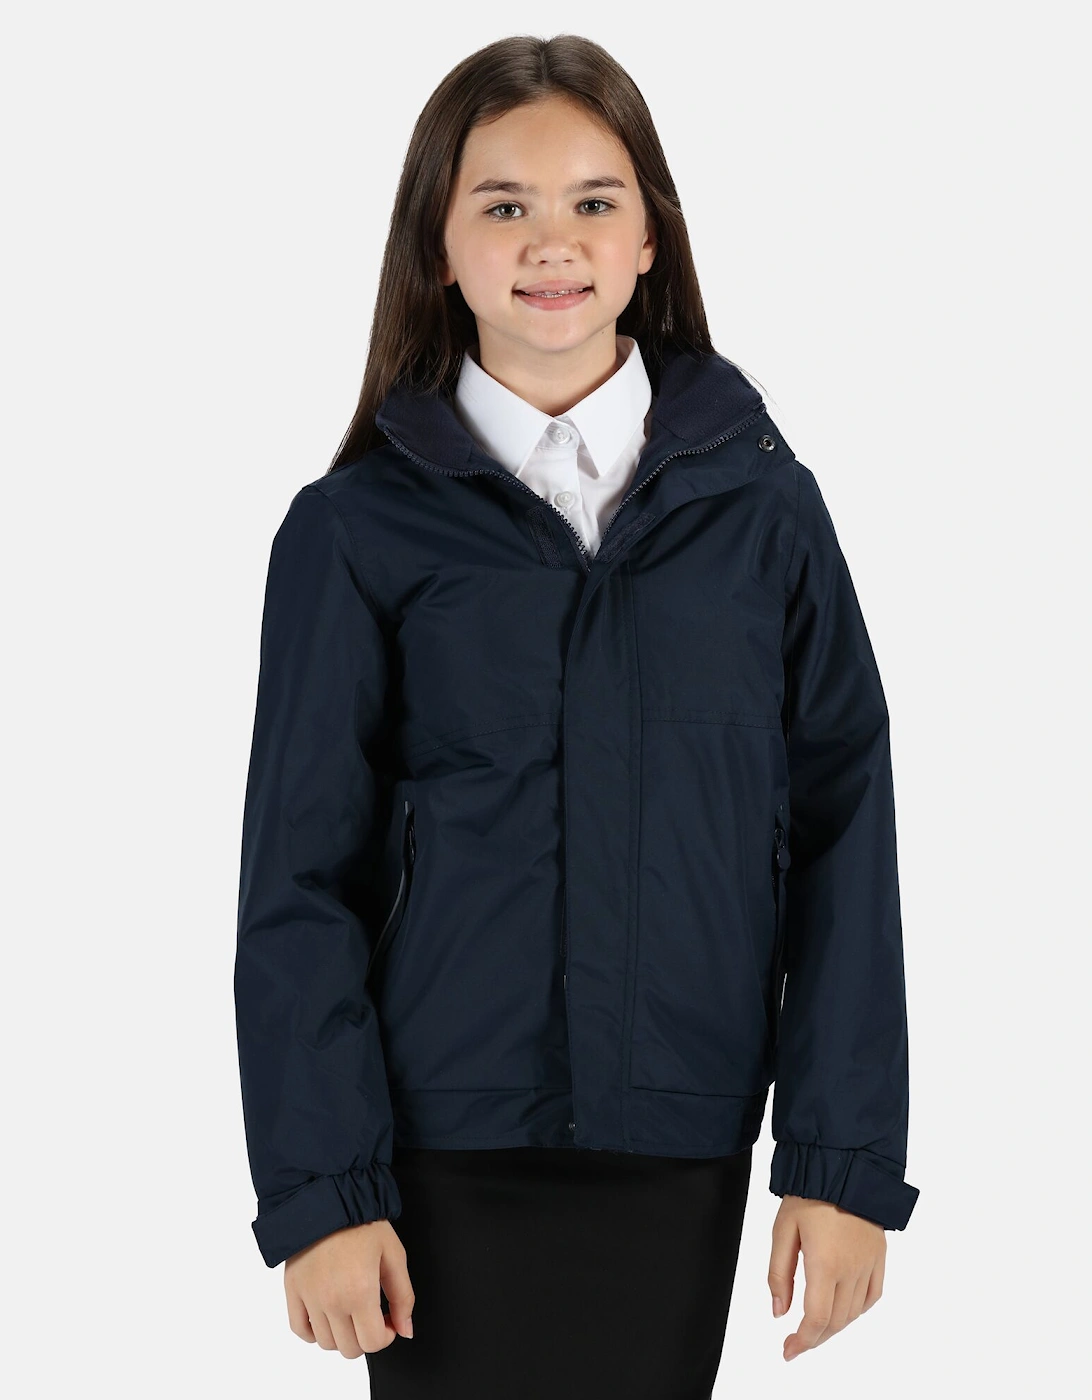 Kids Unisex Thermoguard Fleece Lined Dover Jacket (Windproof & Waterproof)